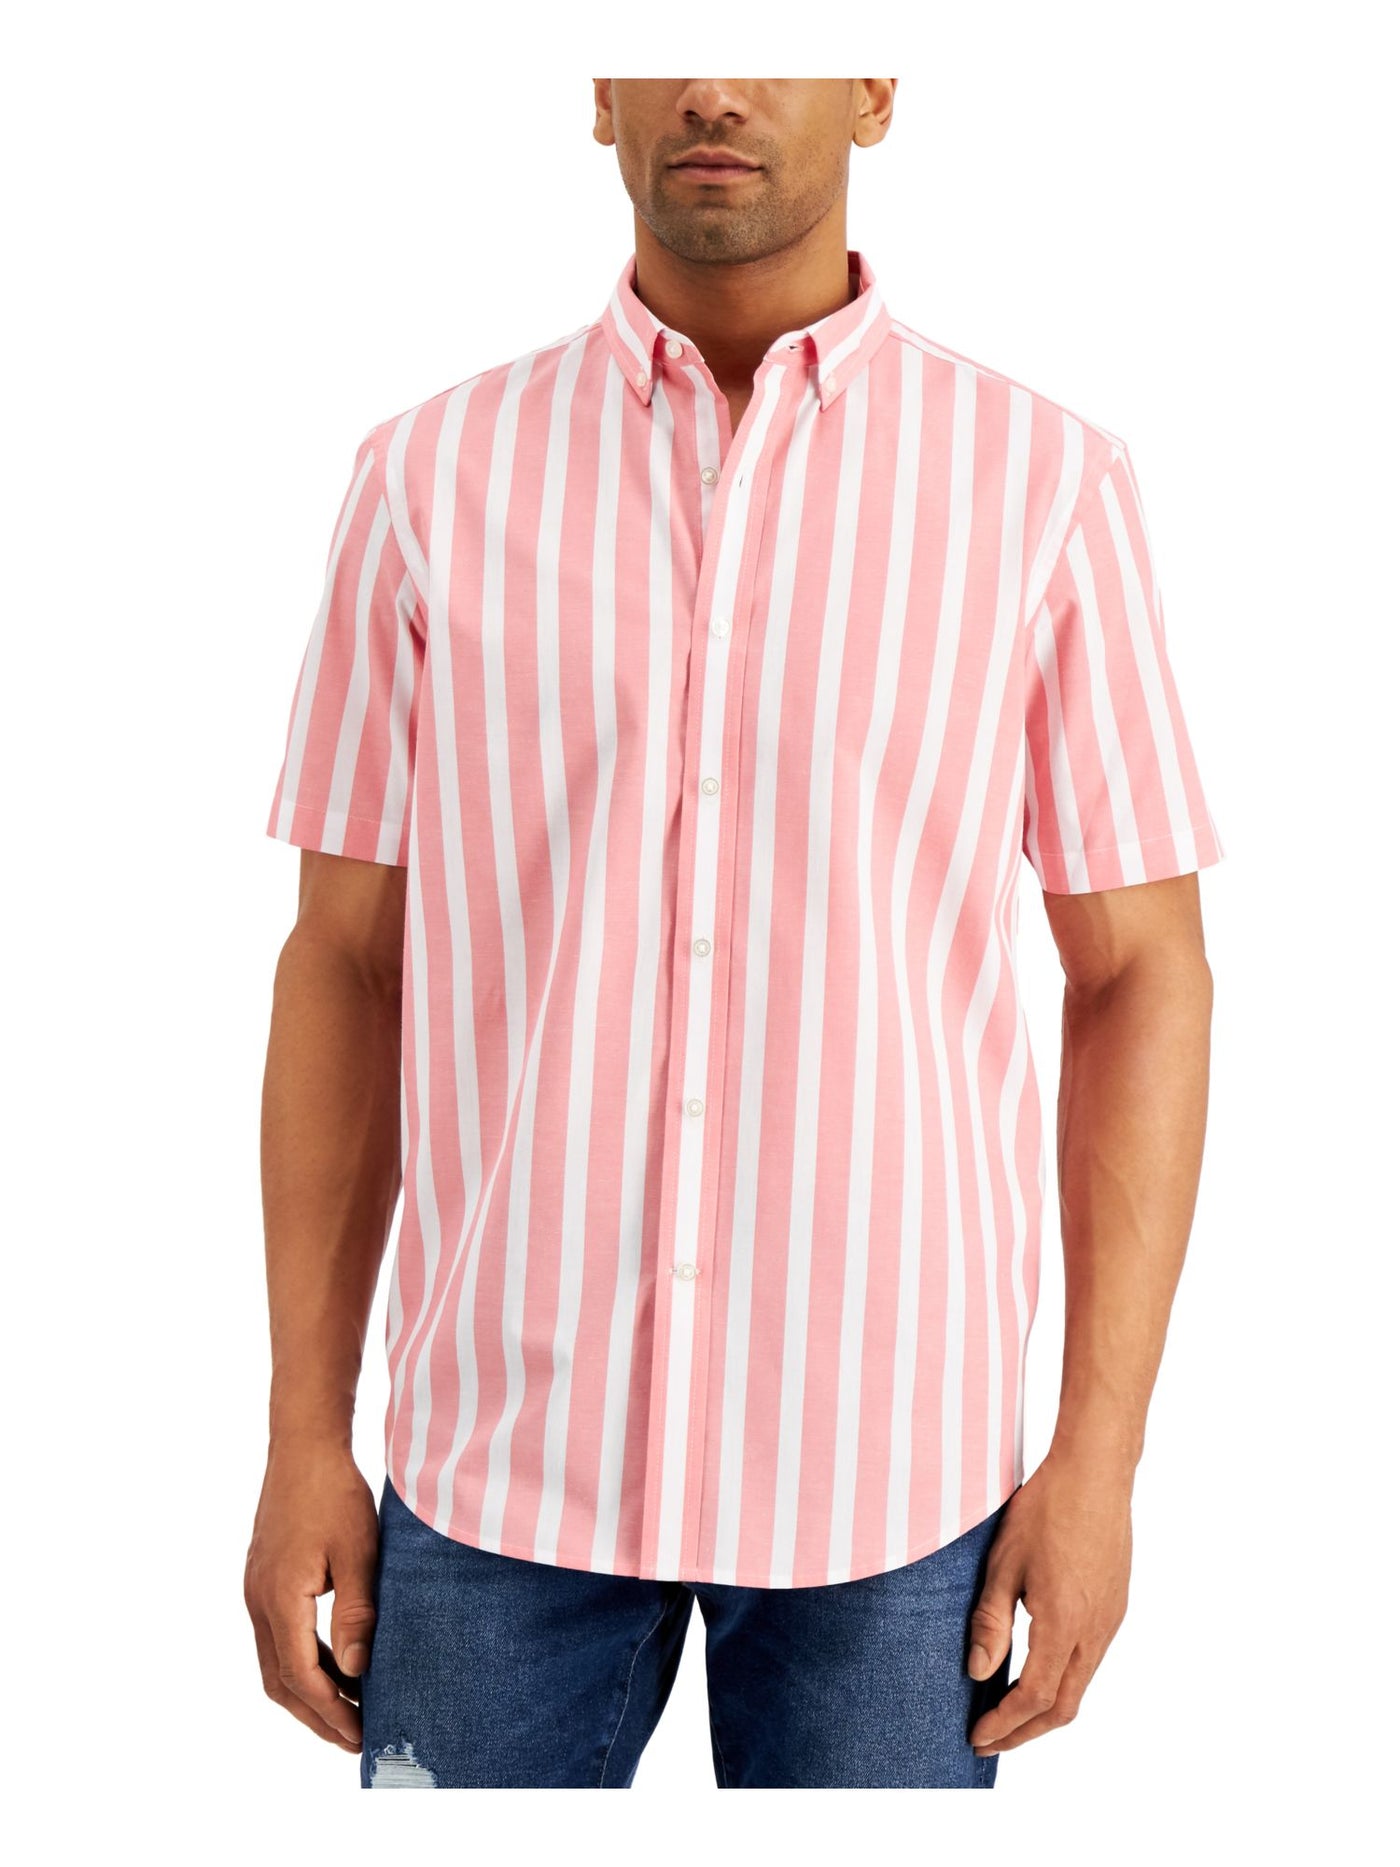 CLUBROOM Mens Pink Striped Collared Classic Fit Dress Shirt XXL